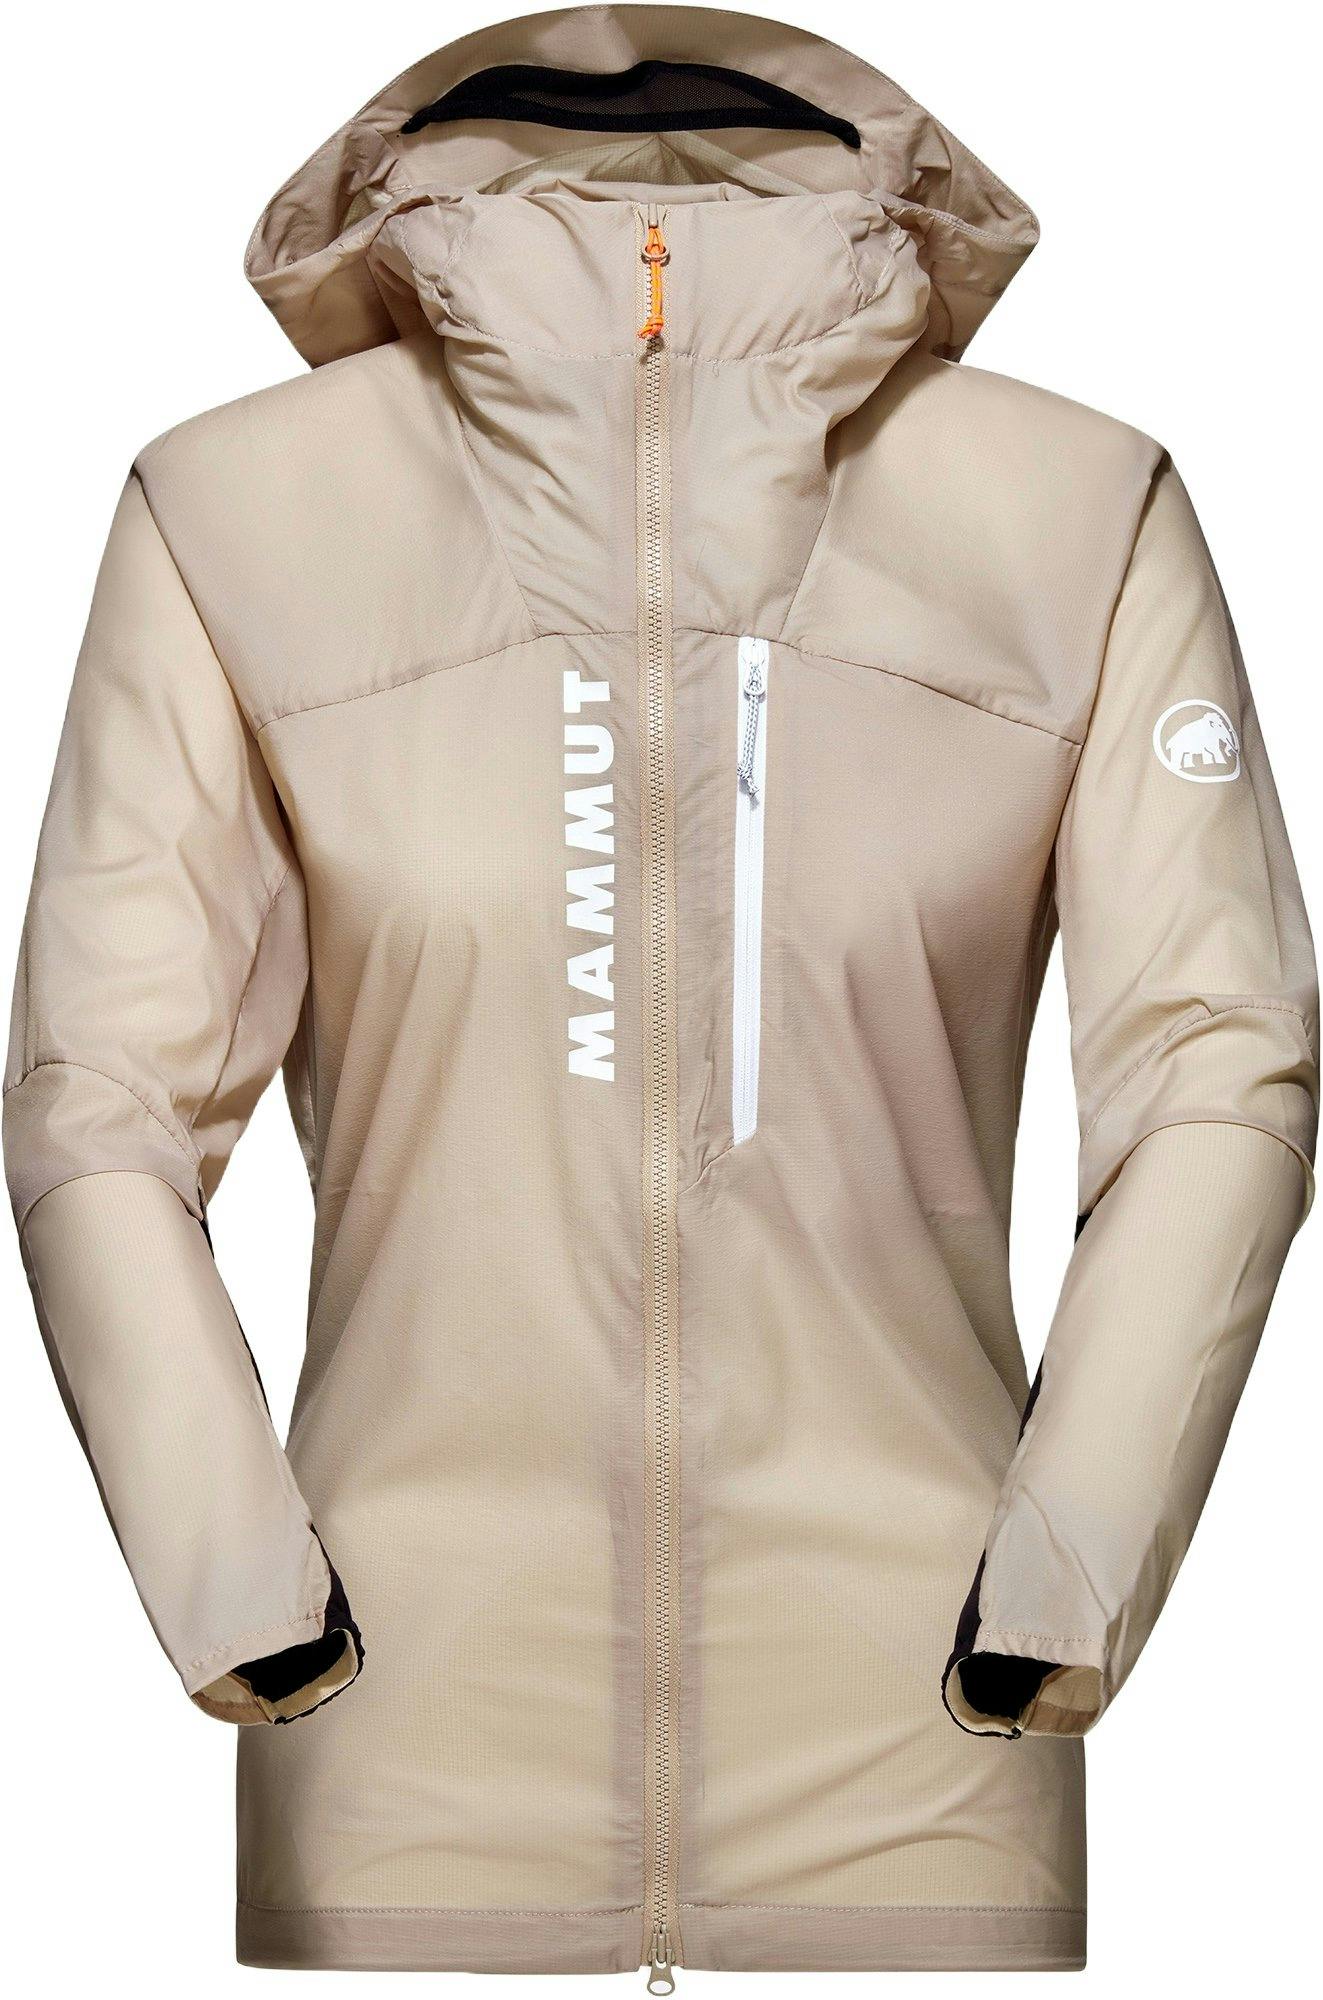 Product image for Aenergy Windbreaker Hooded Jacket - Women's